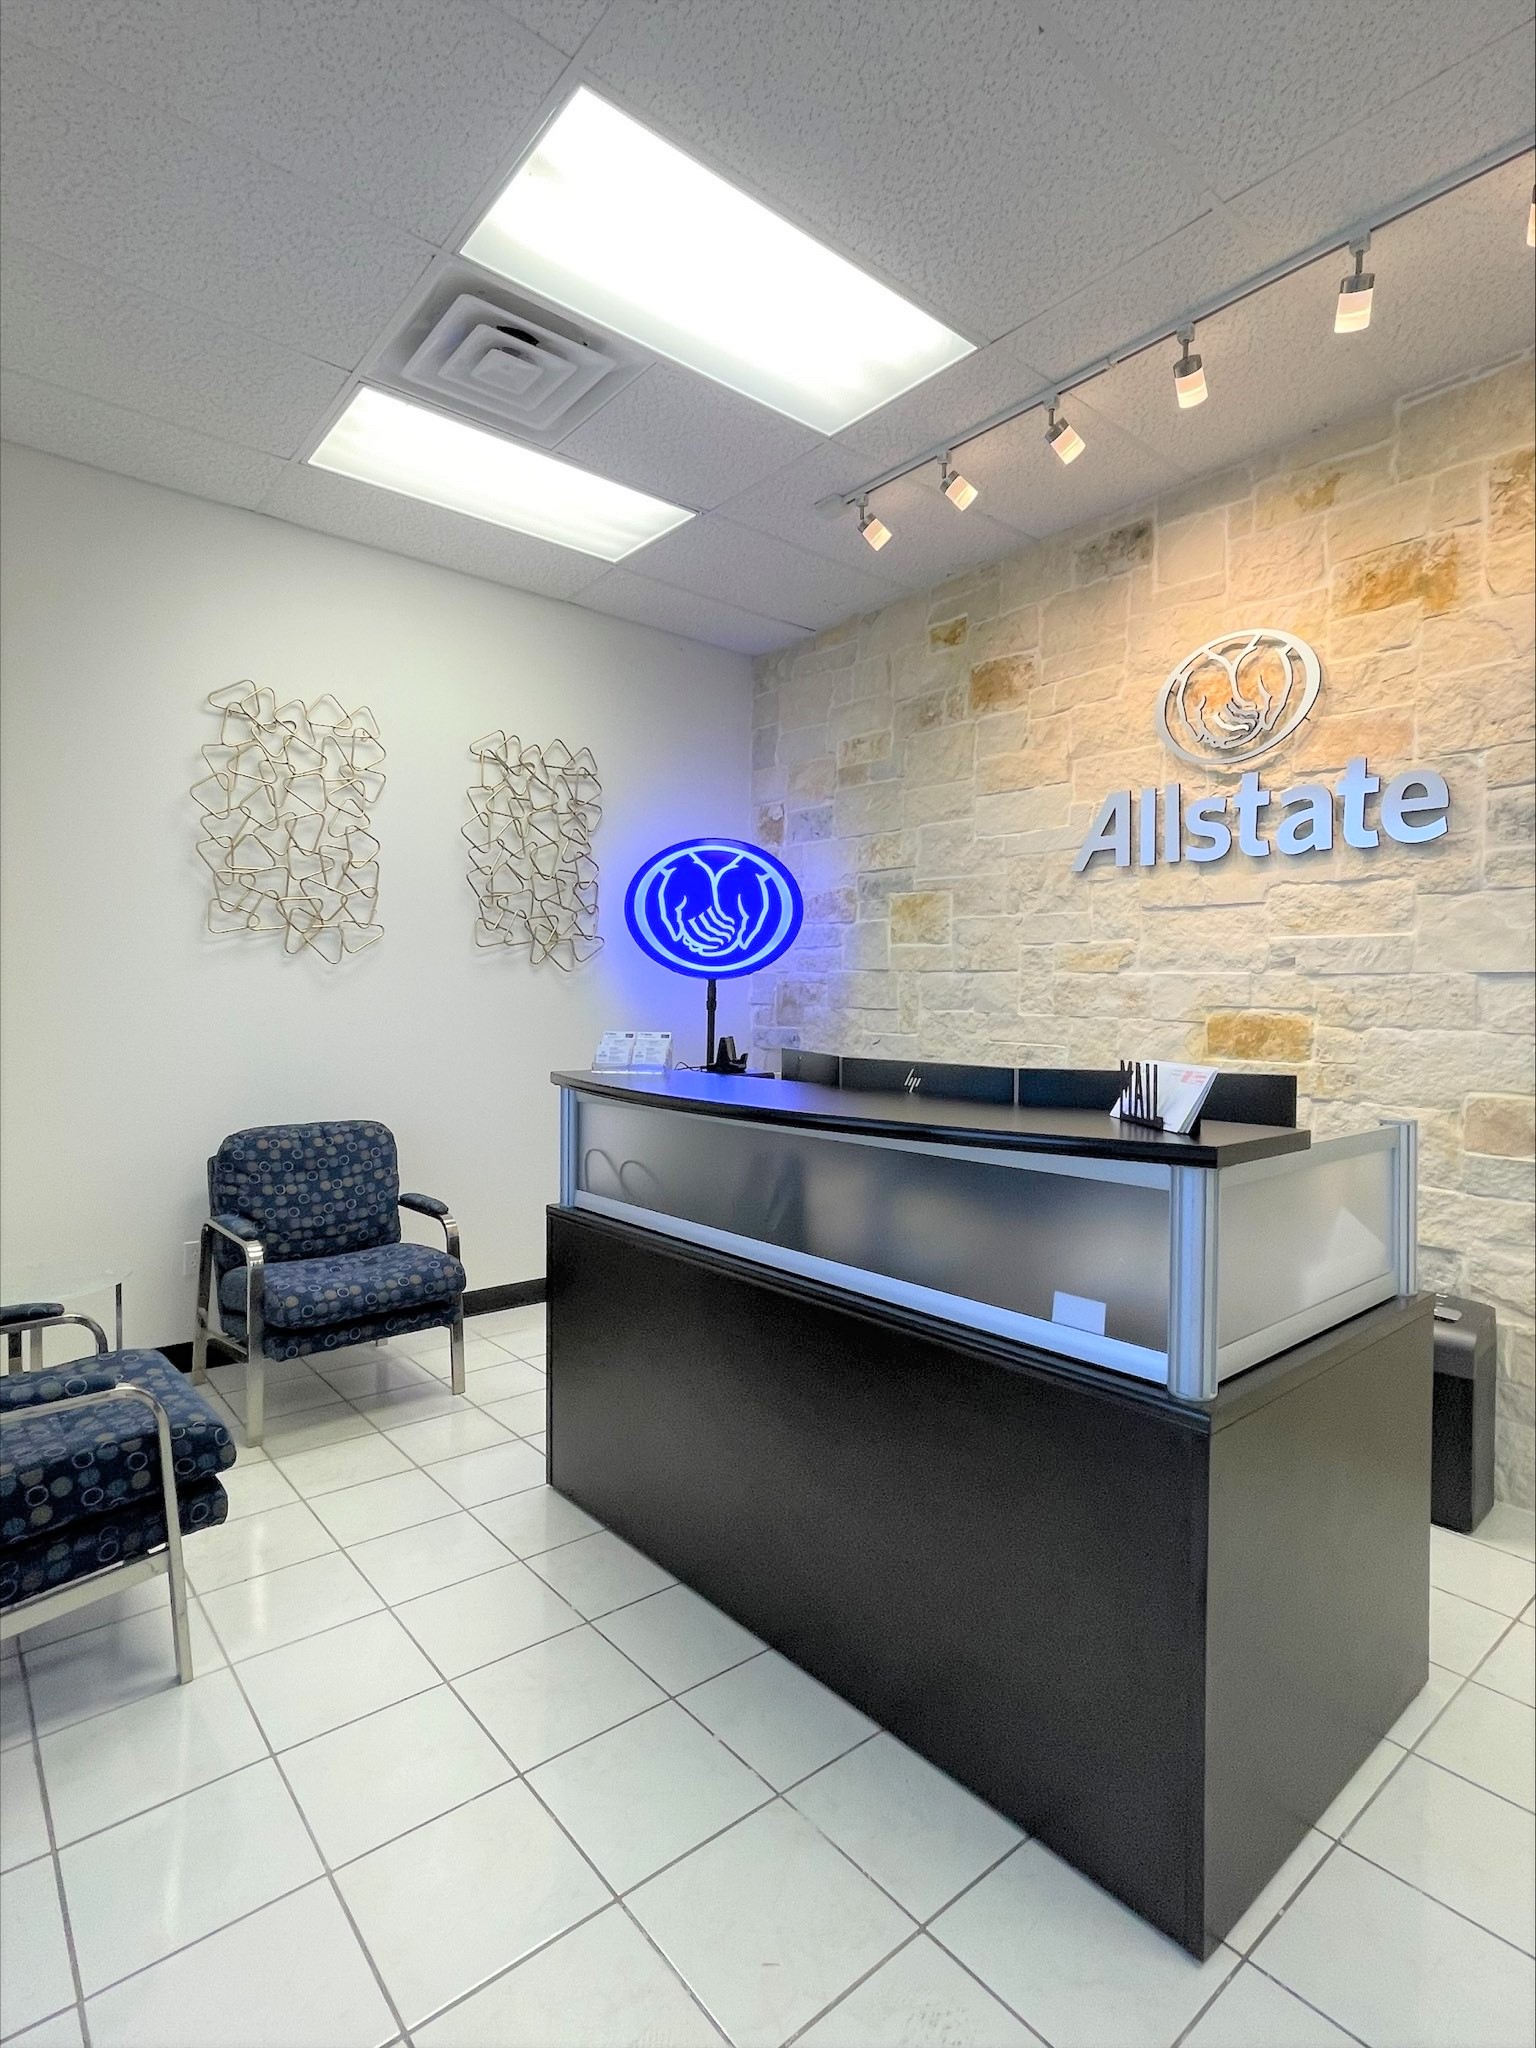 Image 7 | David Acevedo: Allstate Insurance